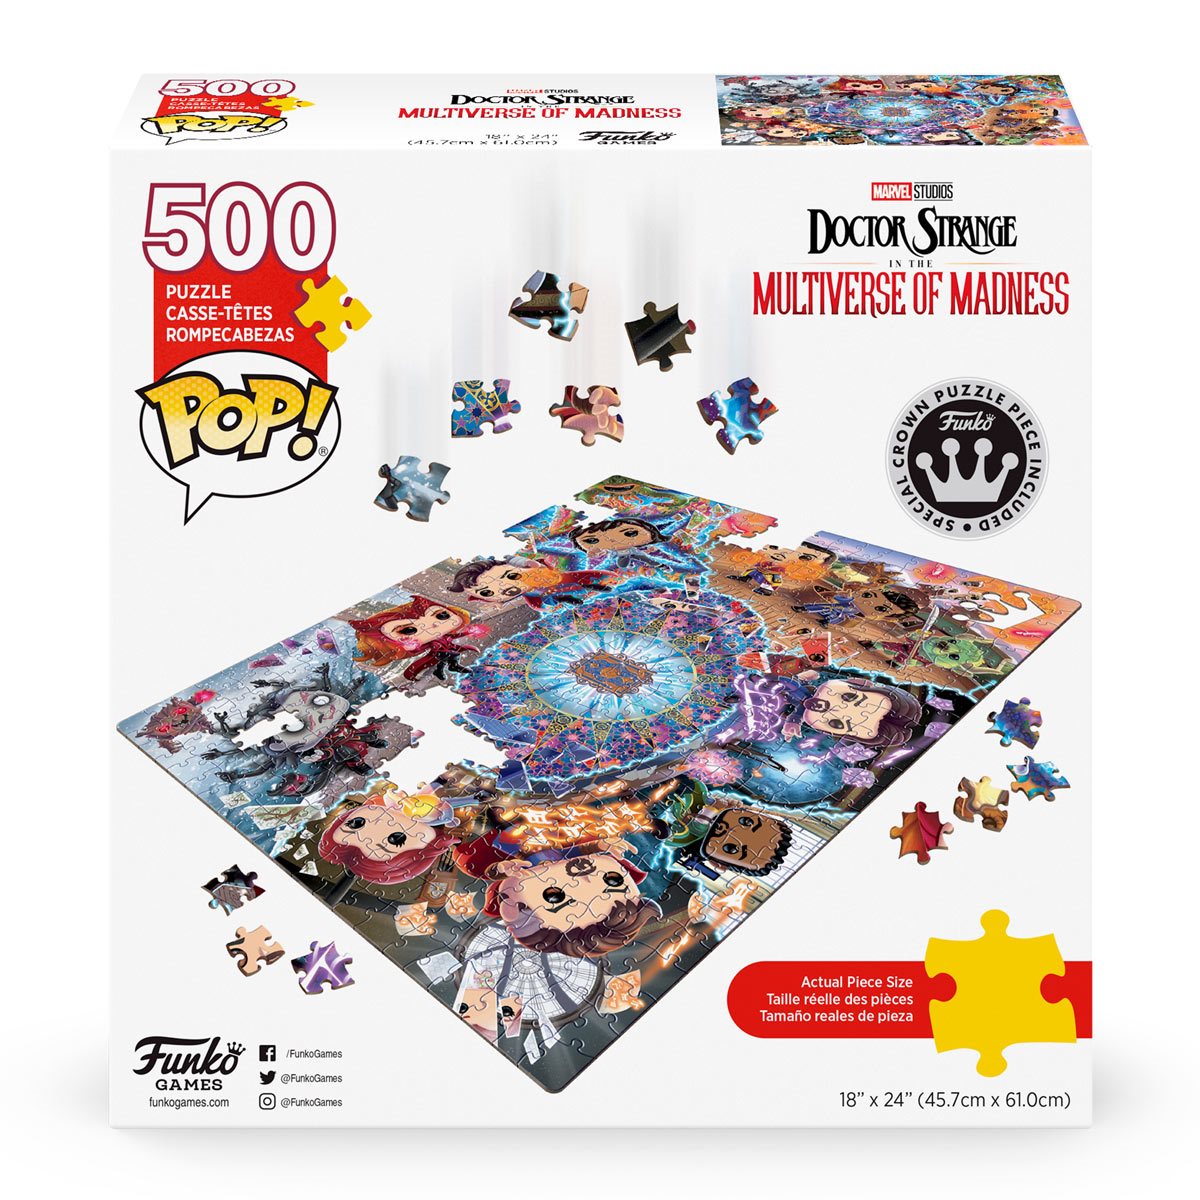 Doctor Strange 500-Piece Pop! Puzzle